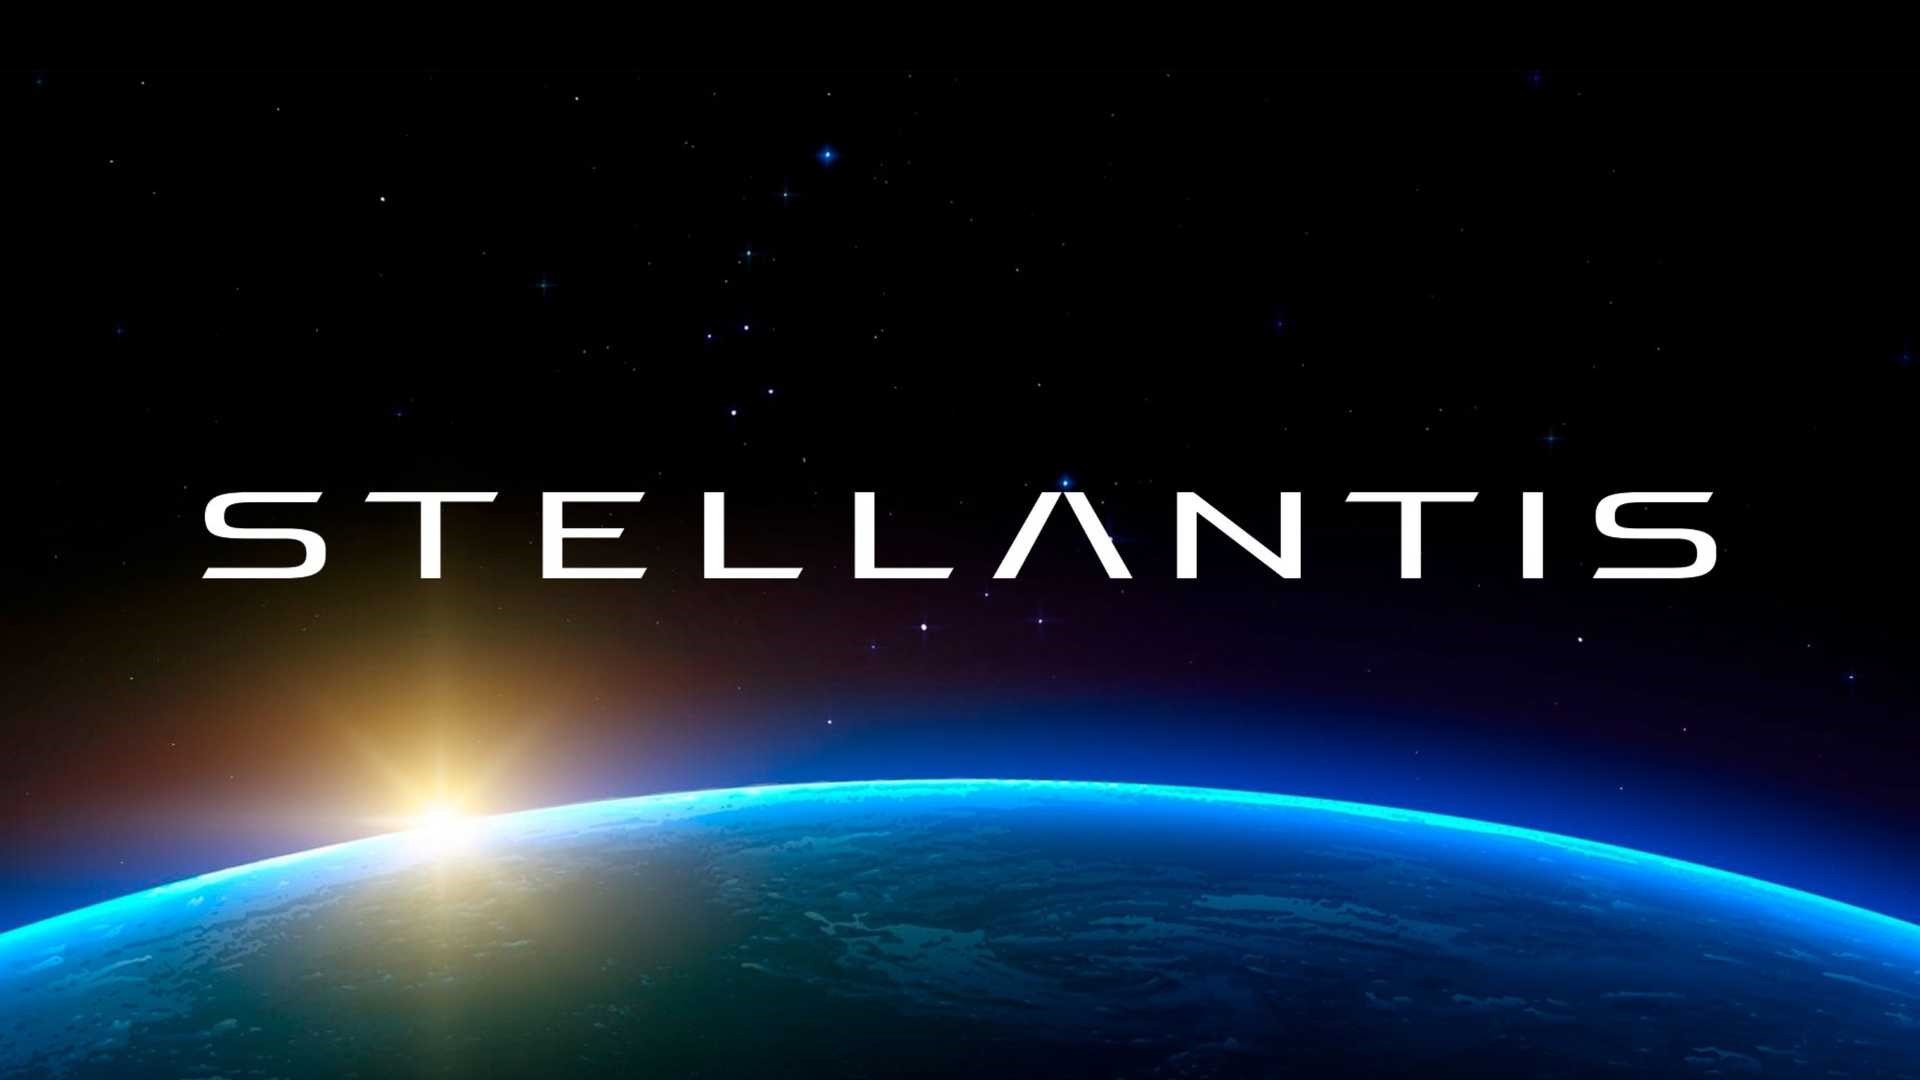 The Stellantis brand.